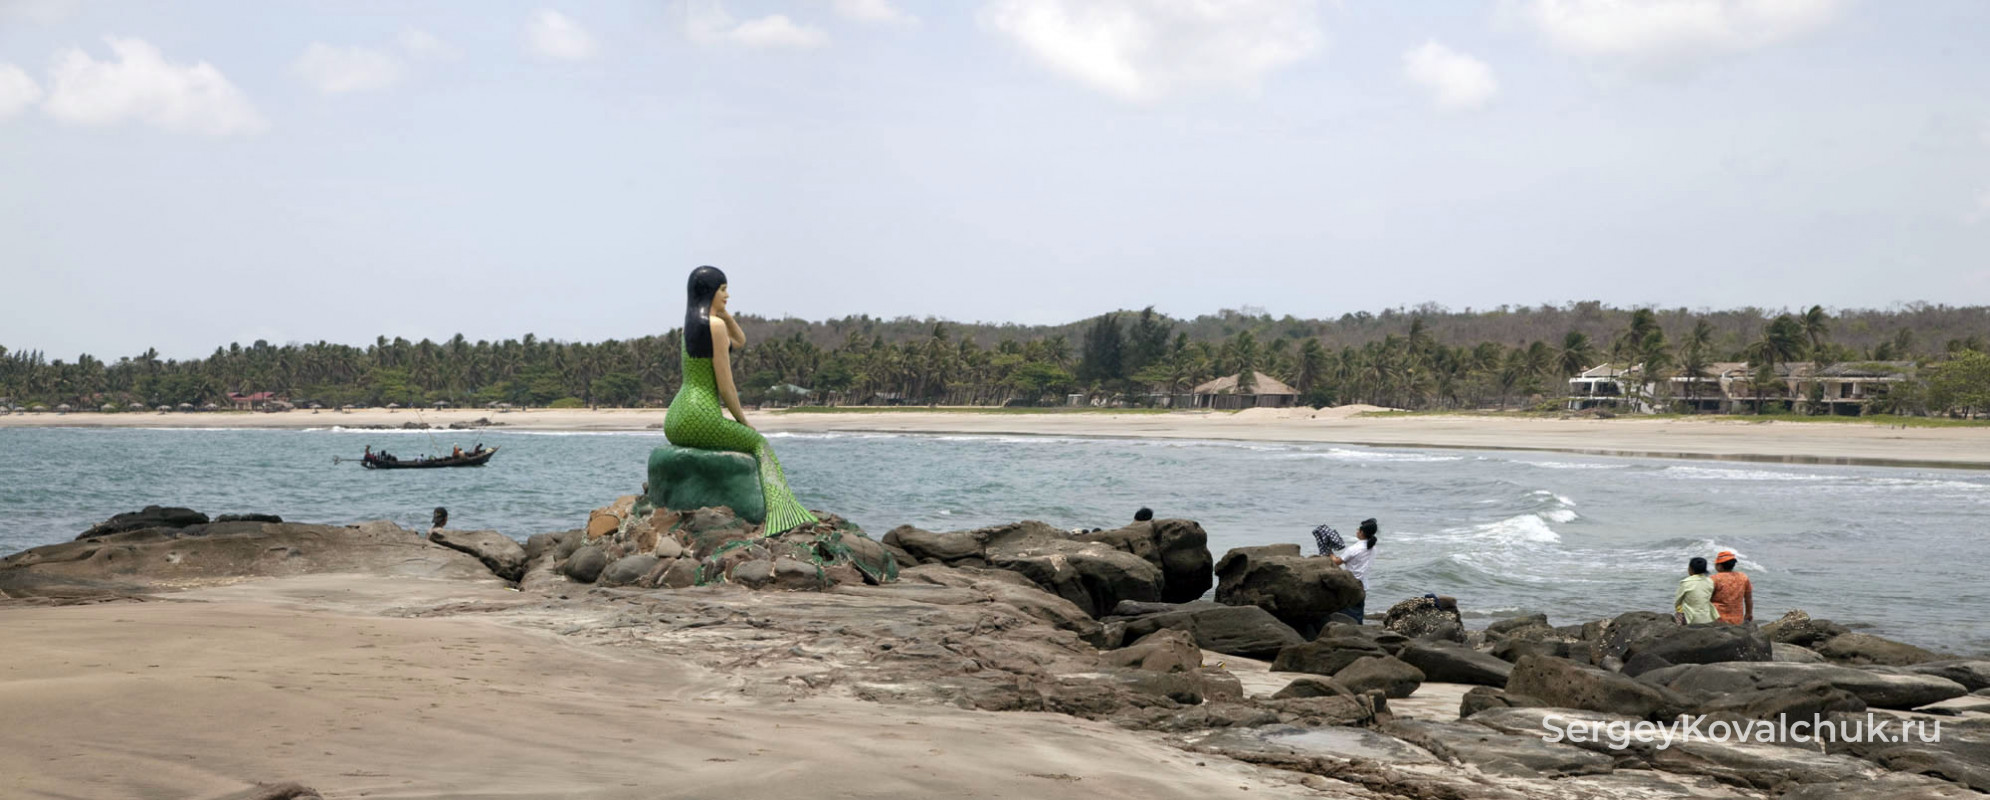 Статуя русалки на пляже Нгве-Саун-Бич